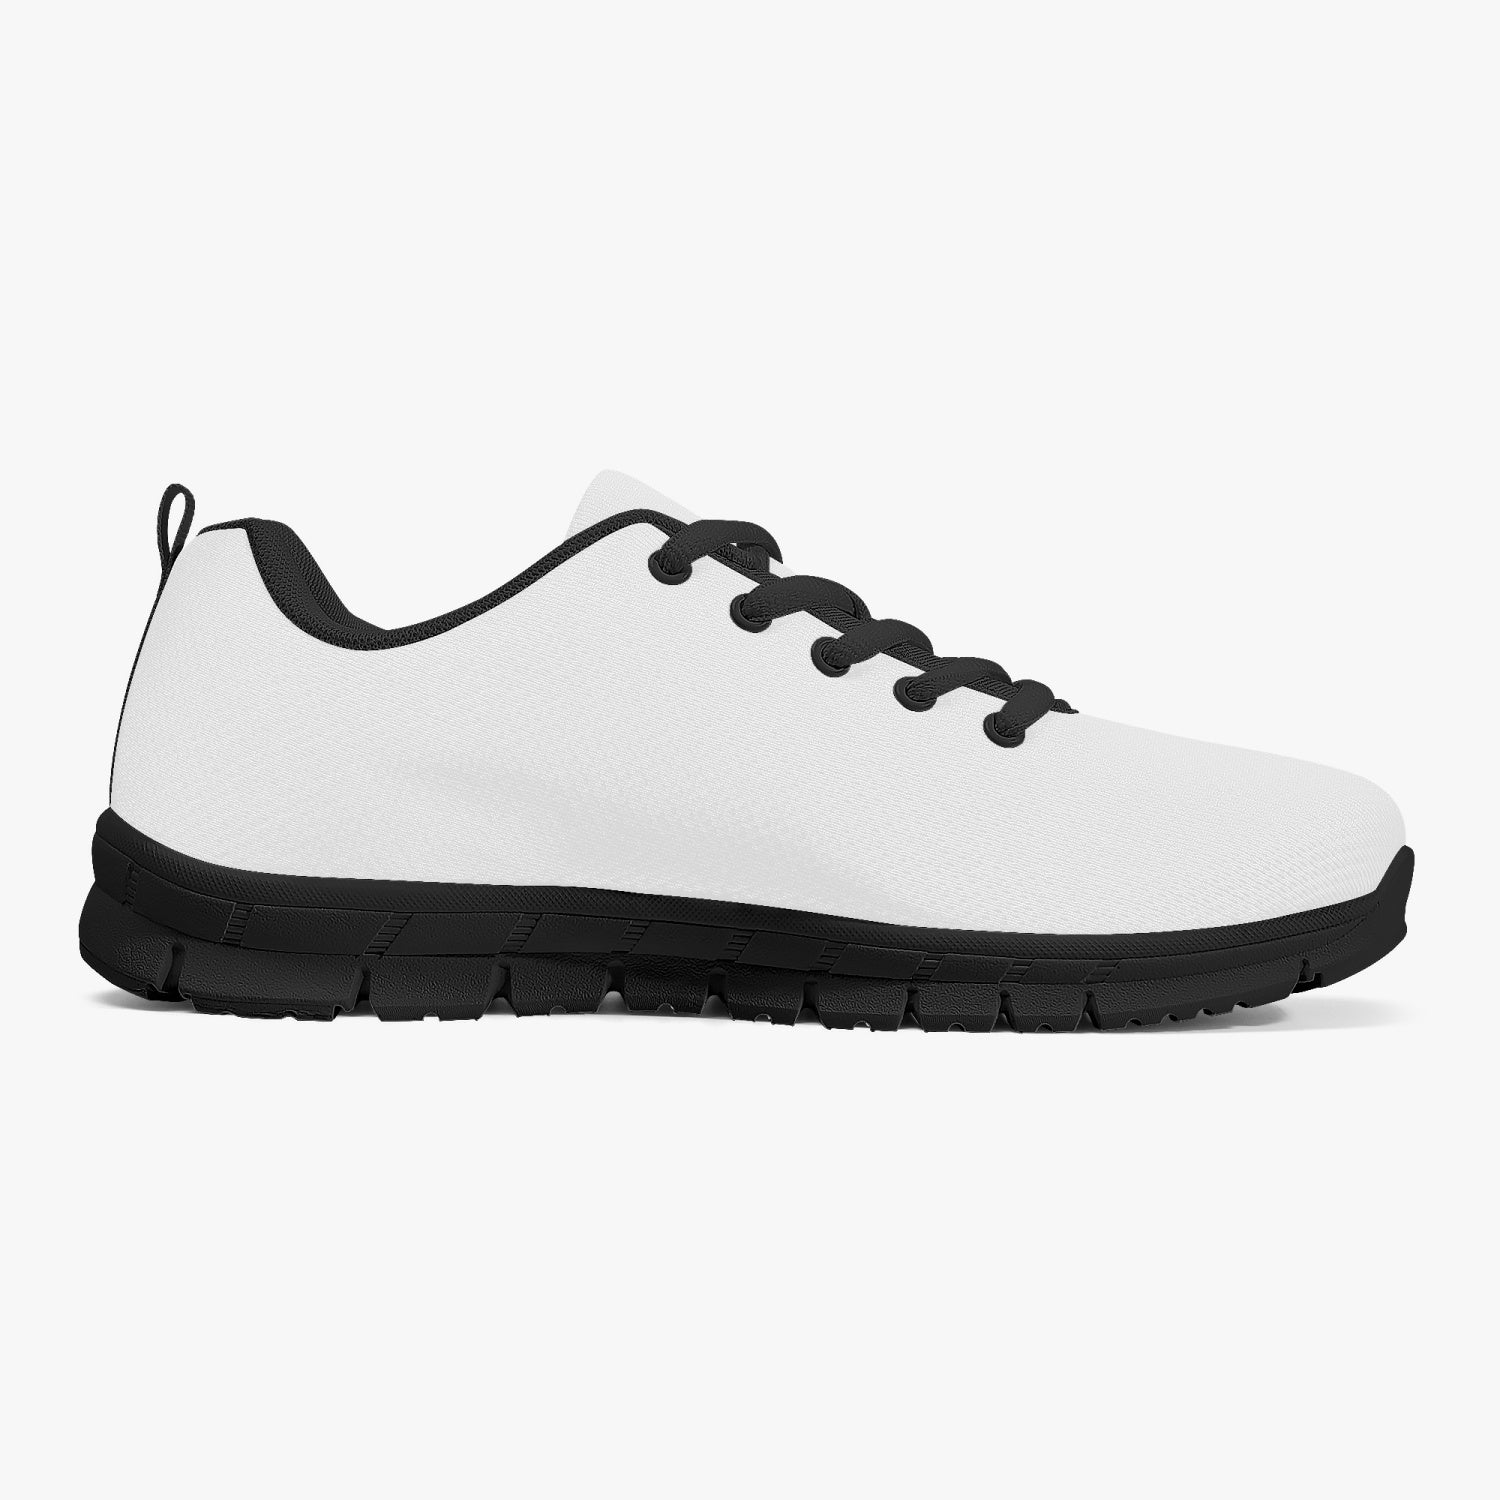 smom Classic Lightweight Mesh Sneakers - White/Black